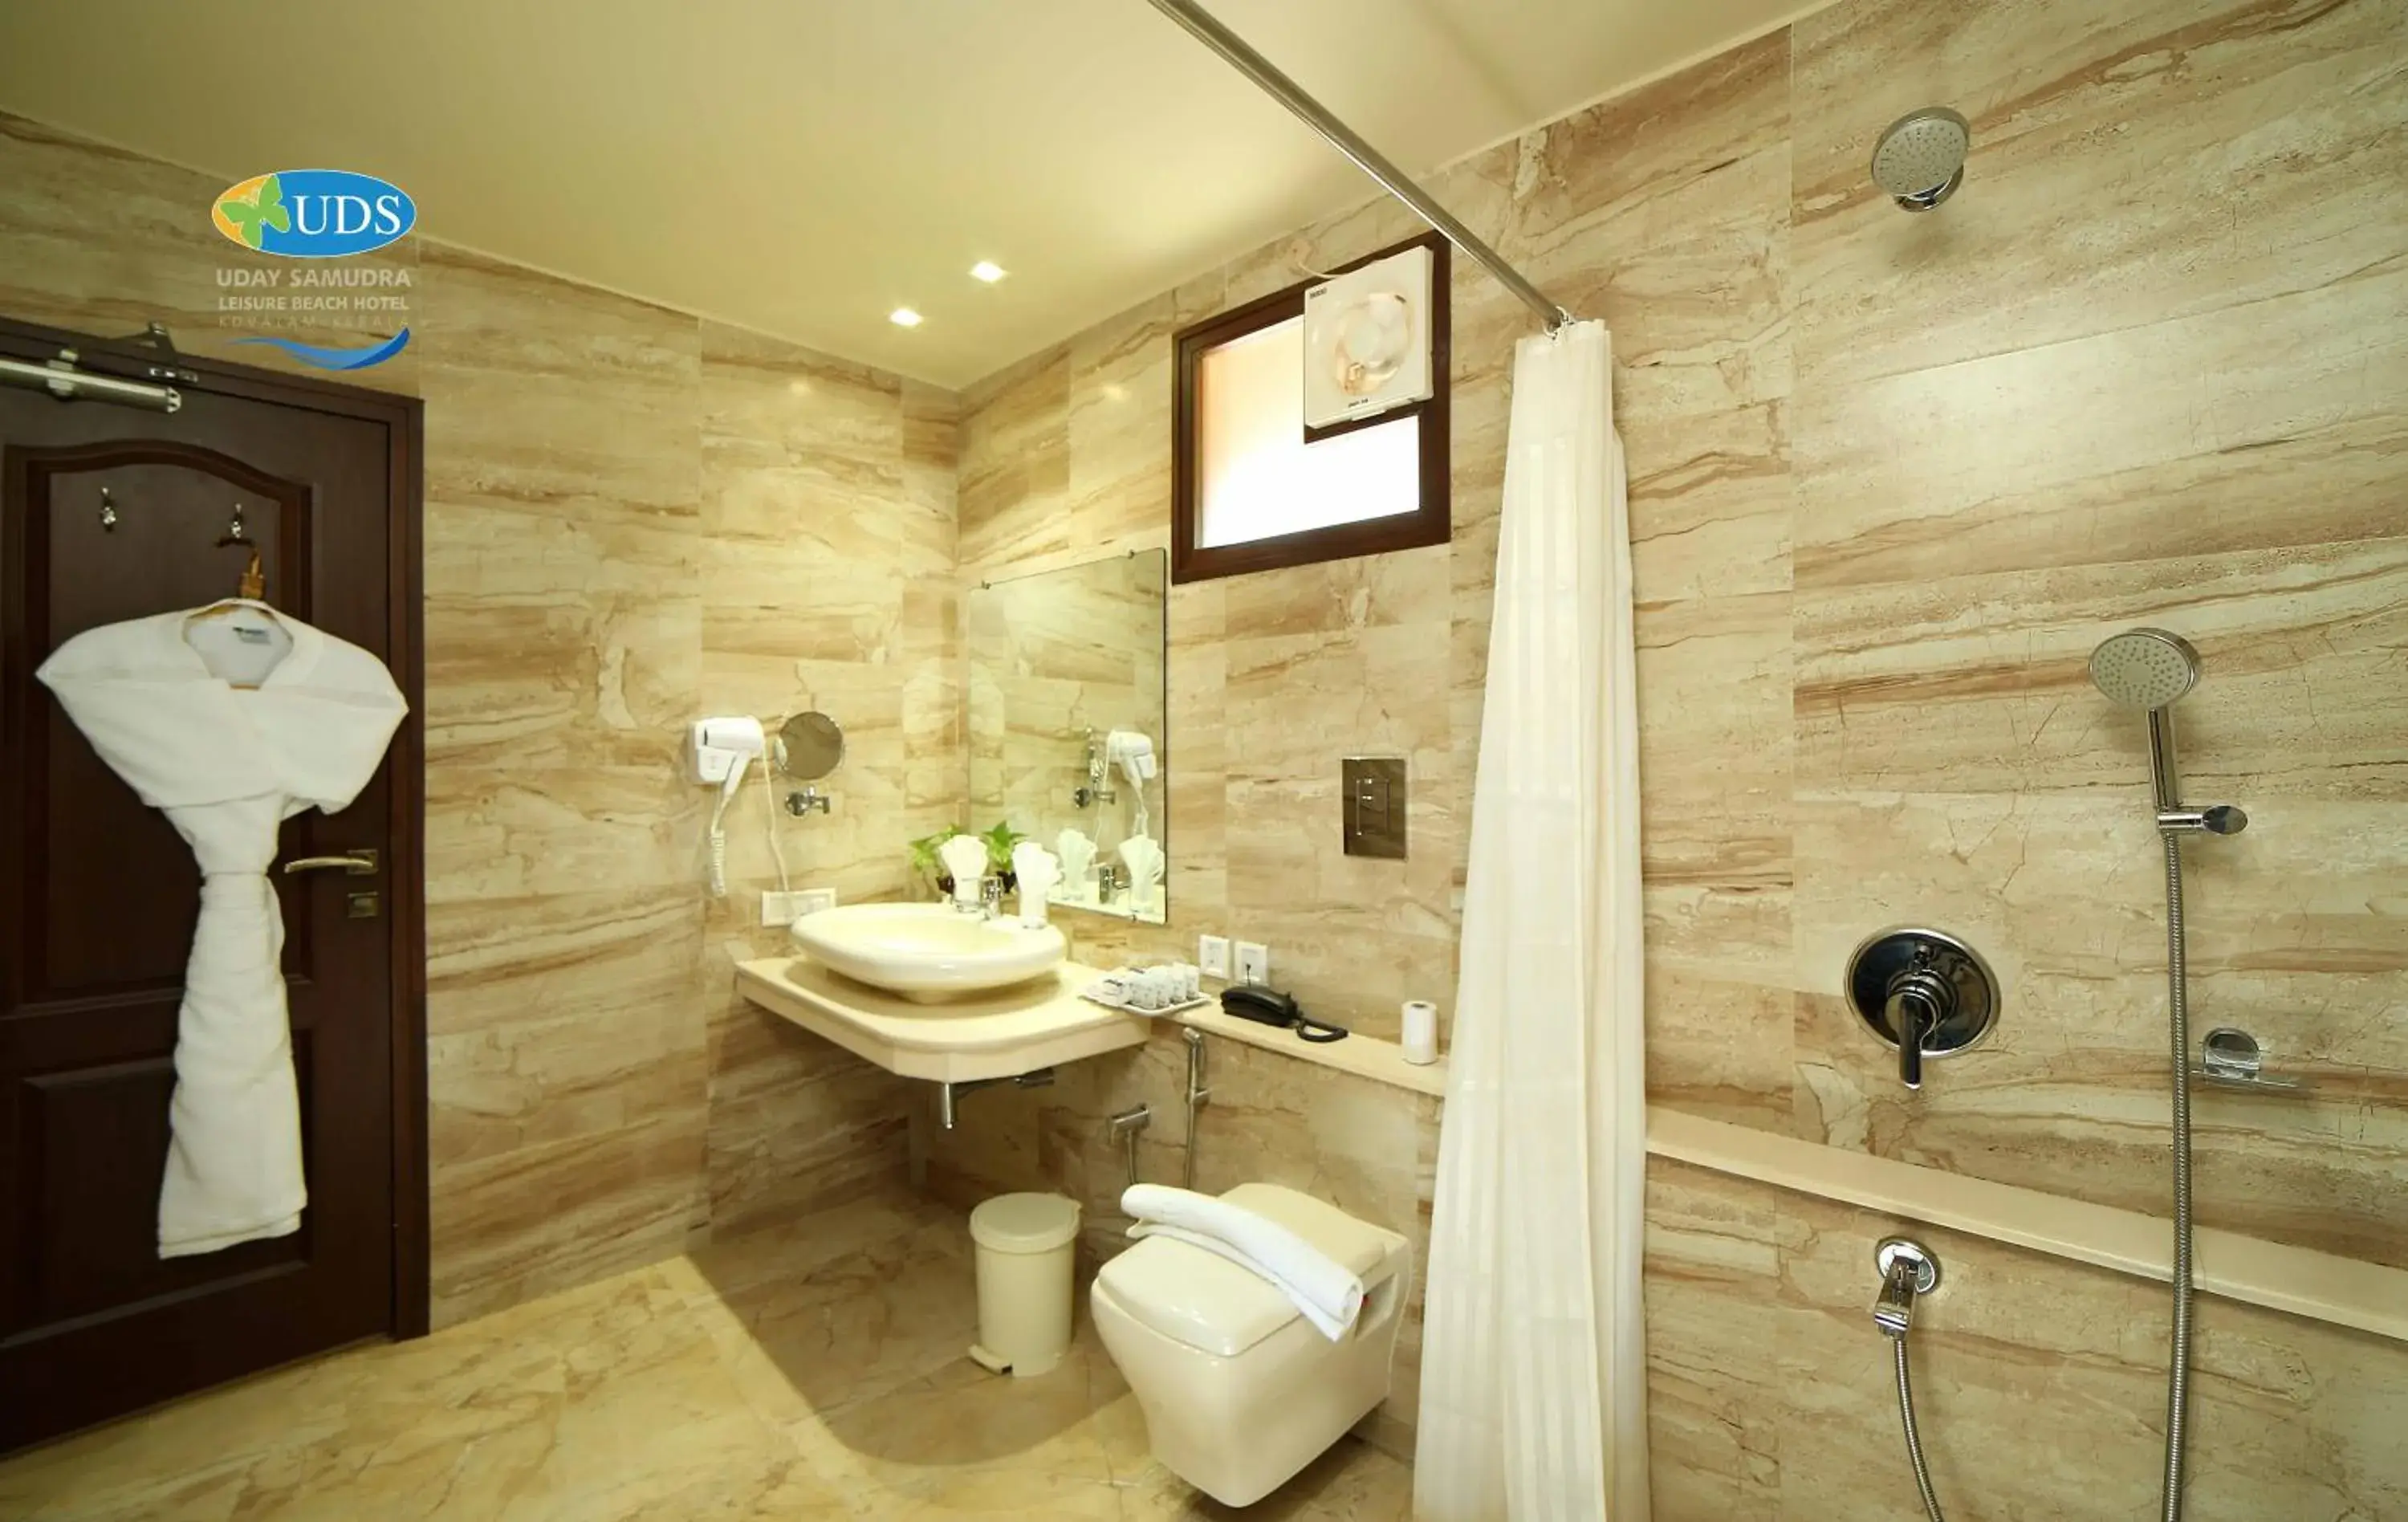 Bathroom in Uday Samudra Leisure Beach Hotel